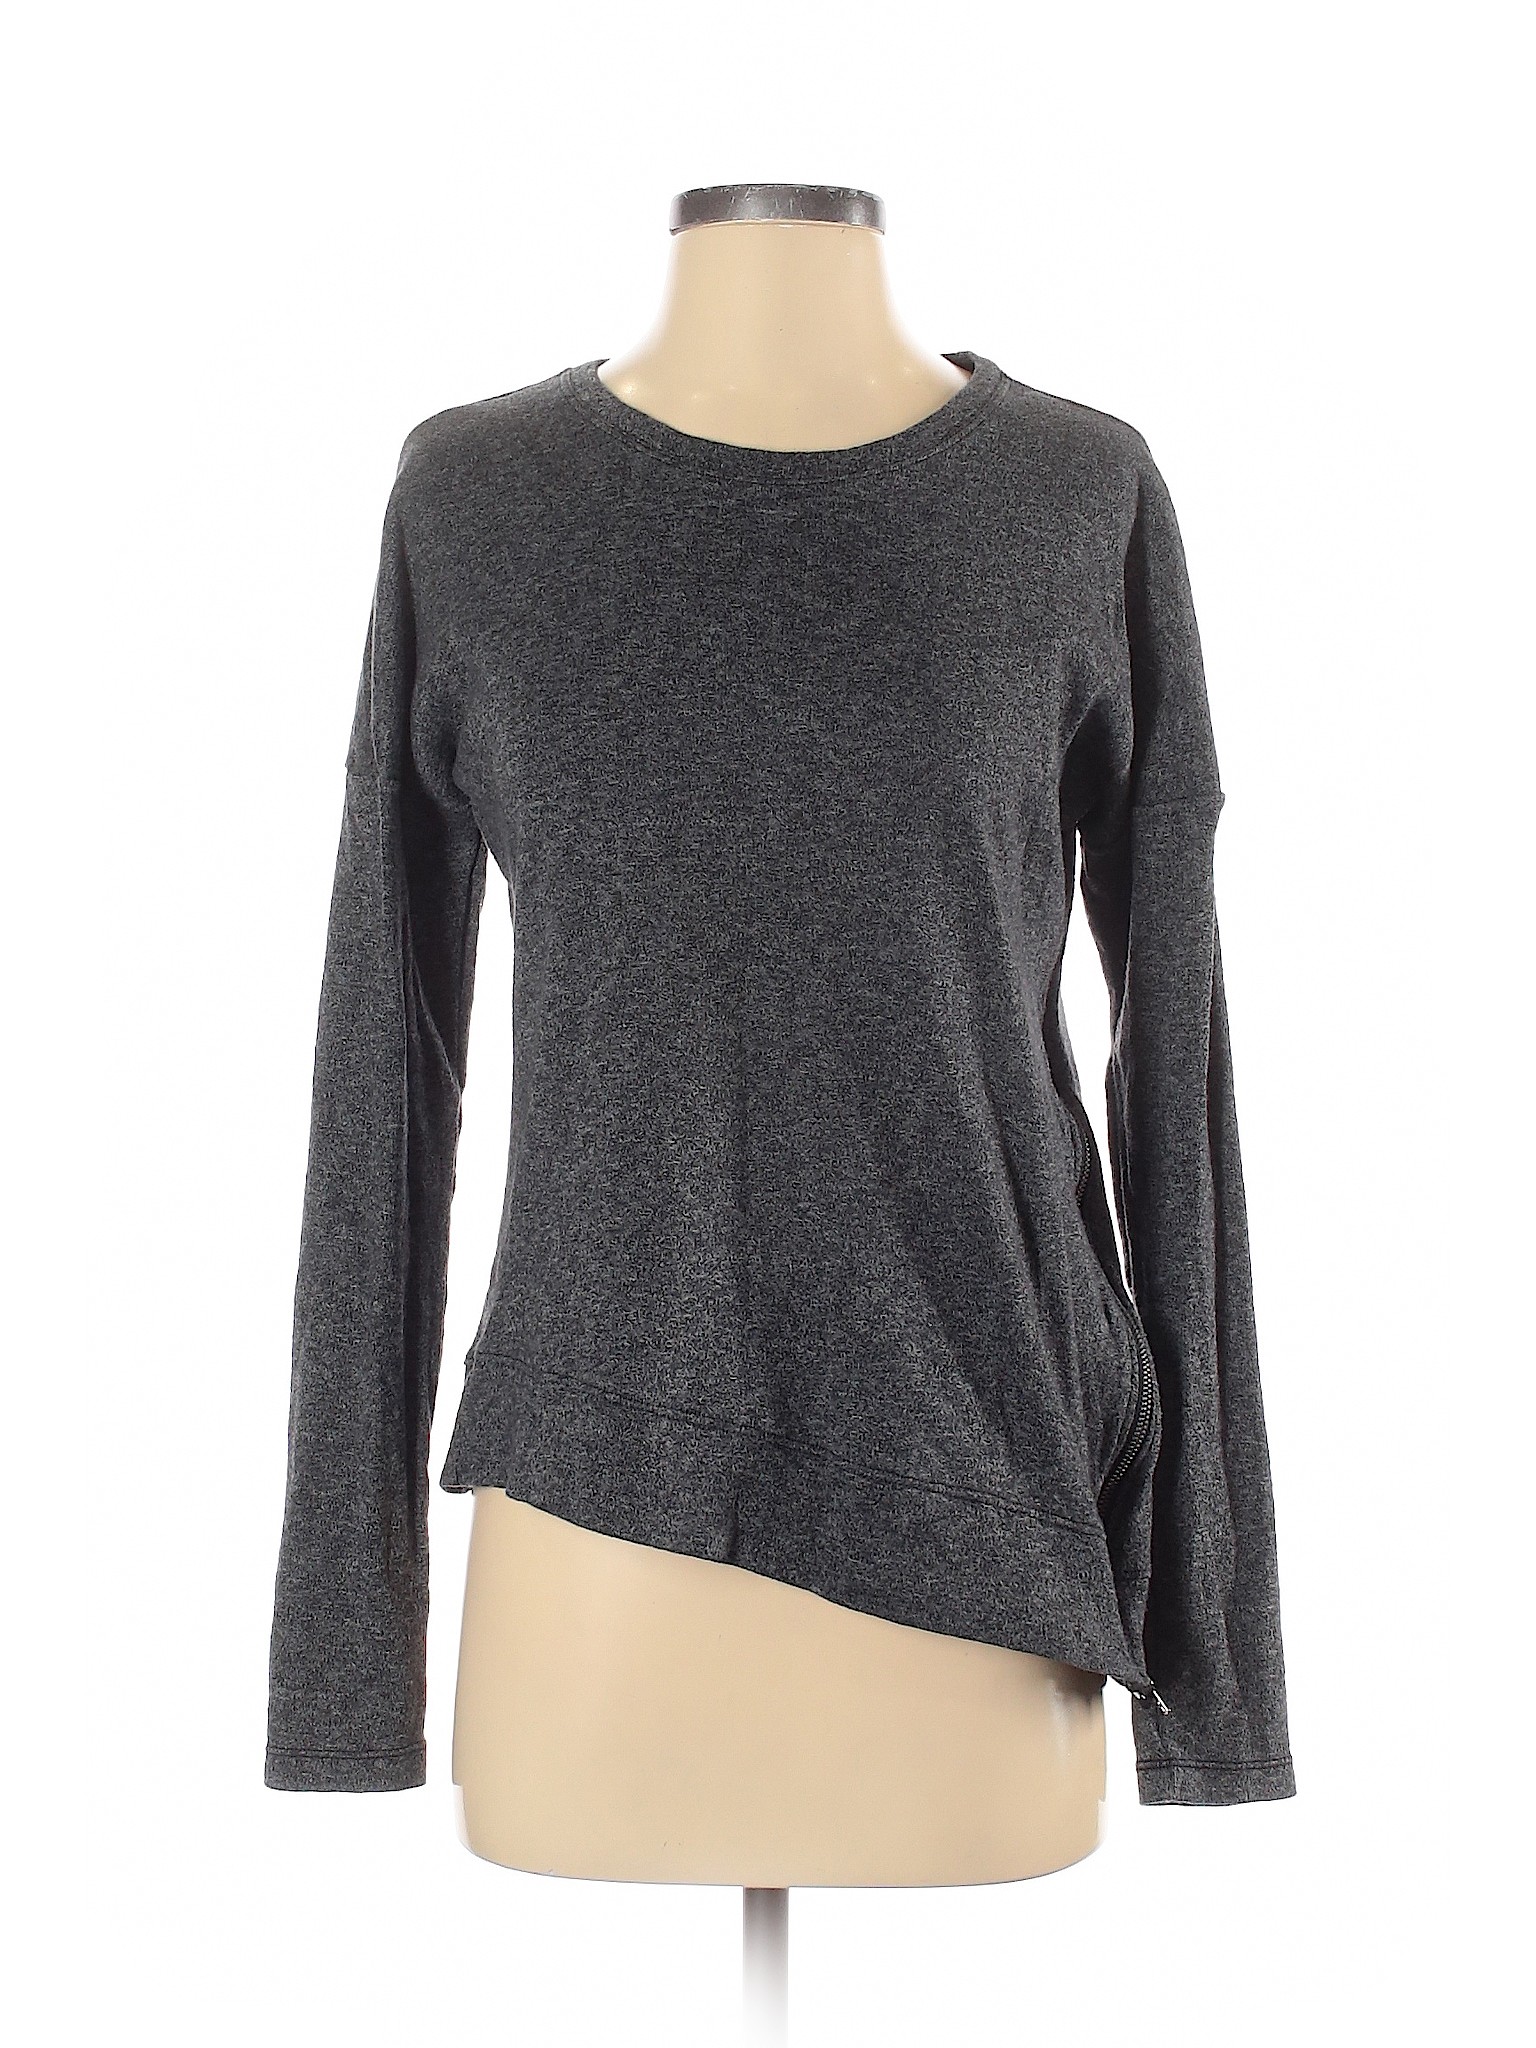 DYI Define Your Inspiration Women Gray Long Sleeve Top XS | eBay